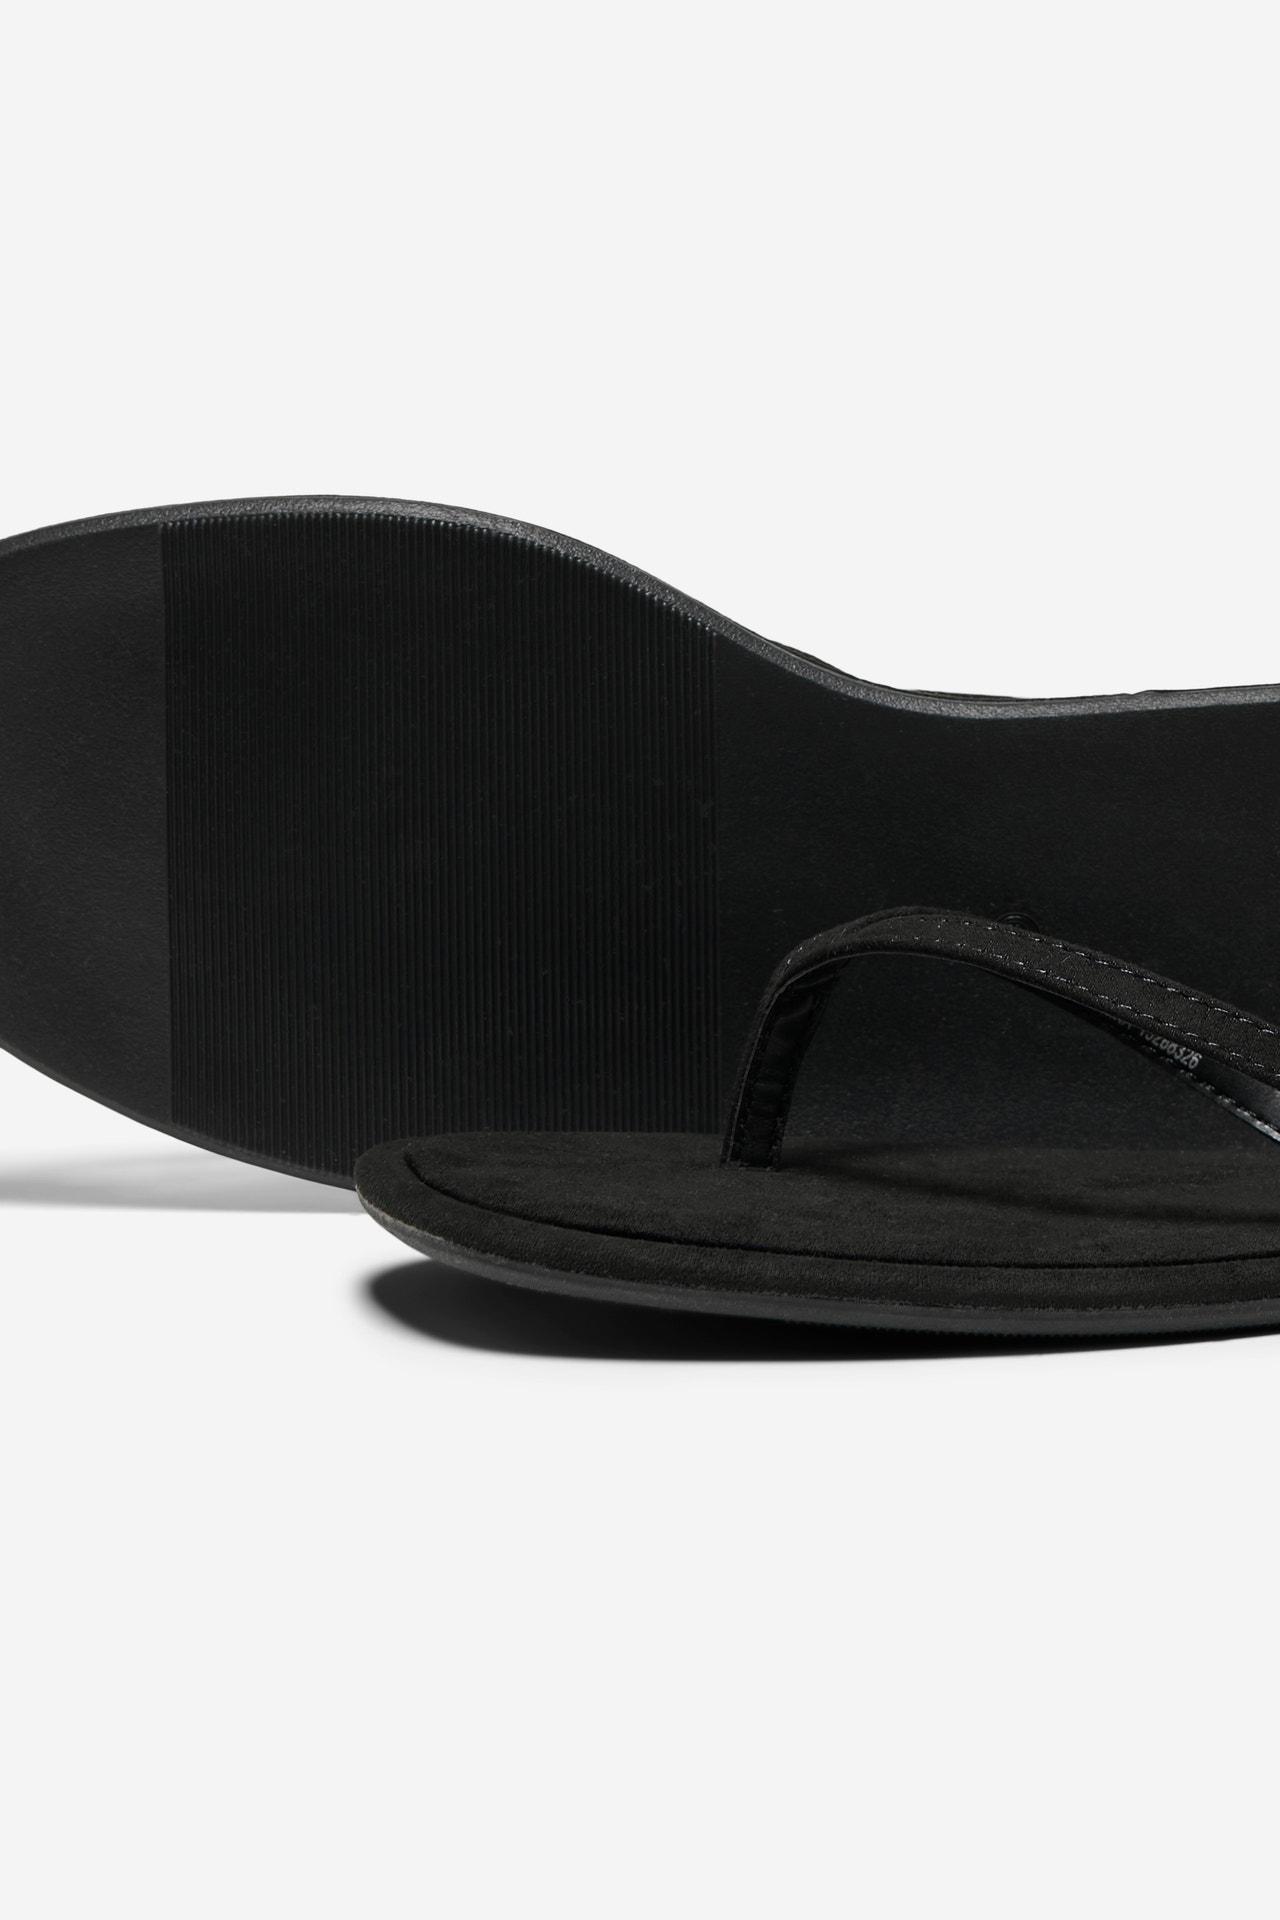 ONLY Flat Sandals -Black - 15288326